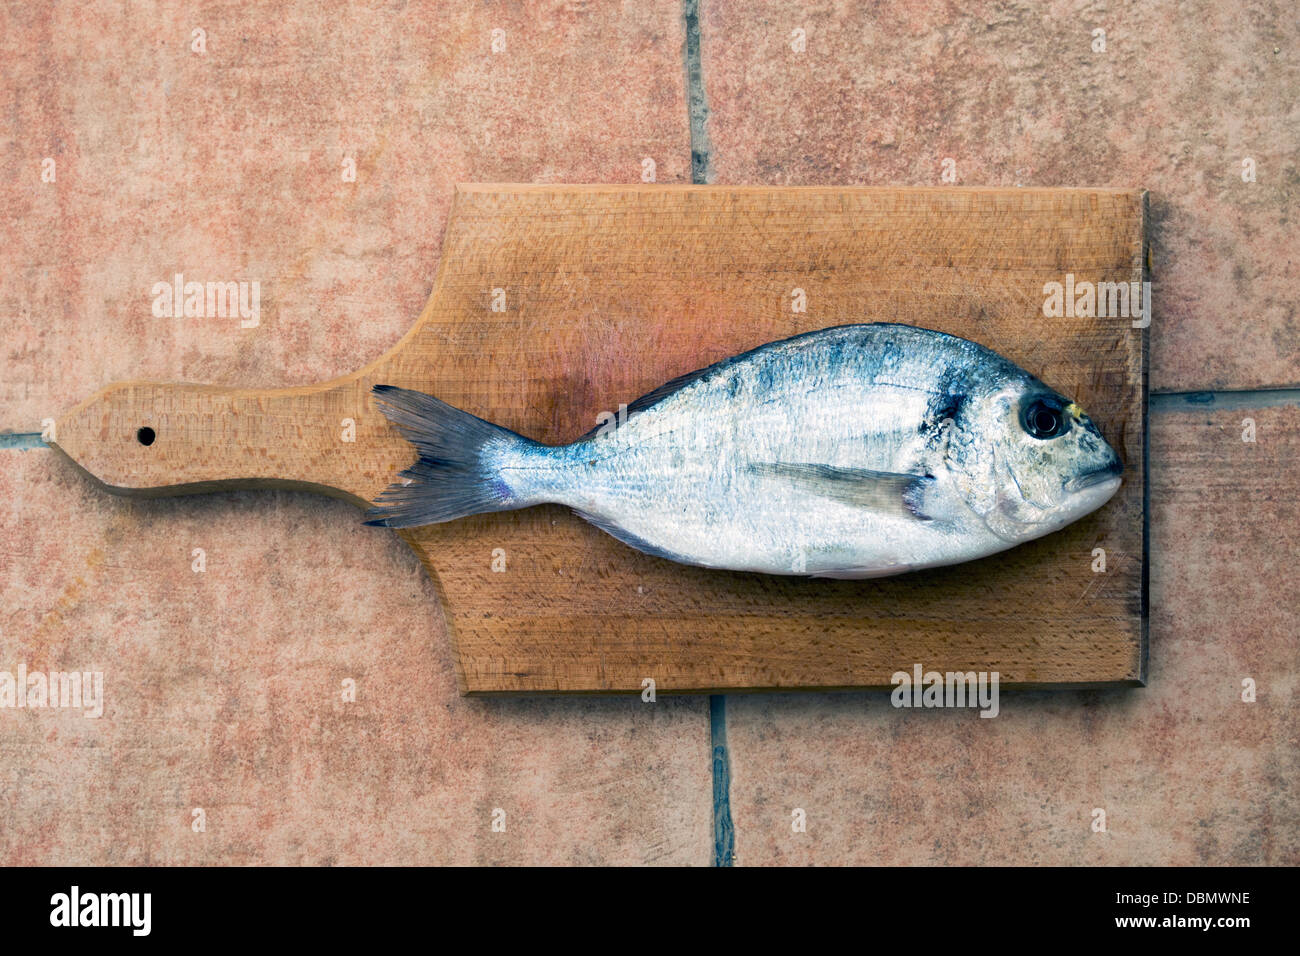 Gilthead seabream fish (Dourada or Sparus aurata) on the cutting board Stock Photo